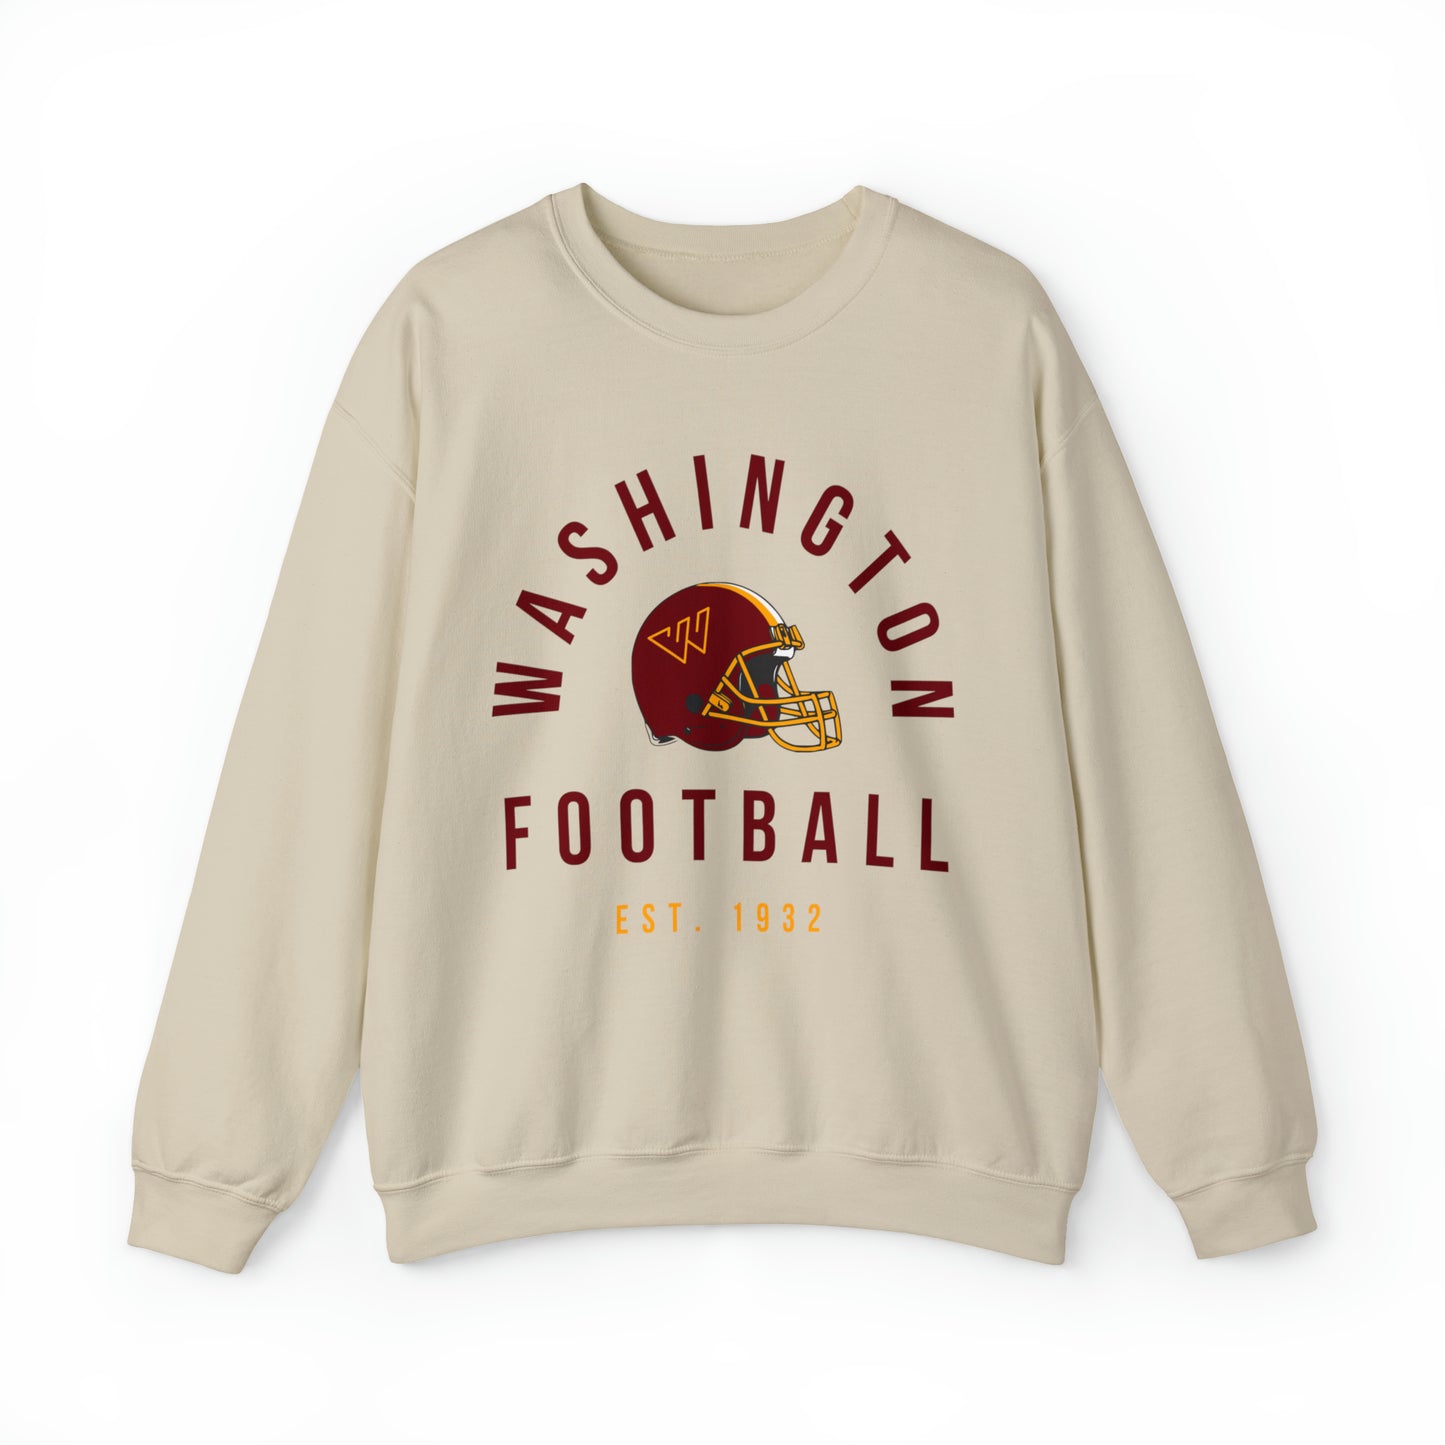 Throwback Washington Commanders Football Crewneck - Vintage Football Sweatshirt - Retro Redskins 70's, 80's, 90's - Design 3